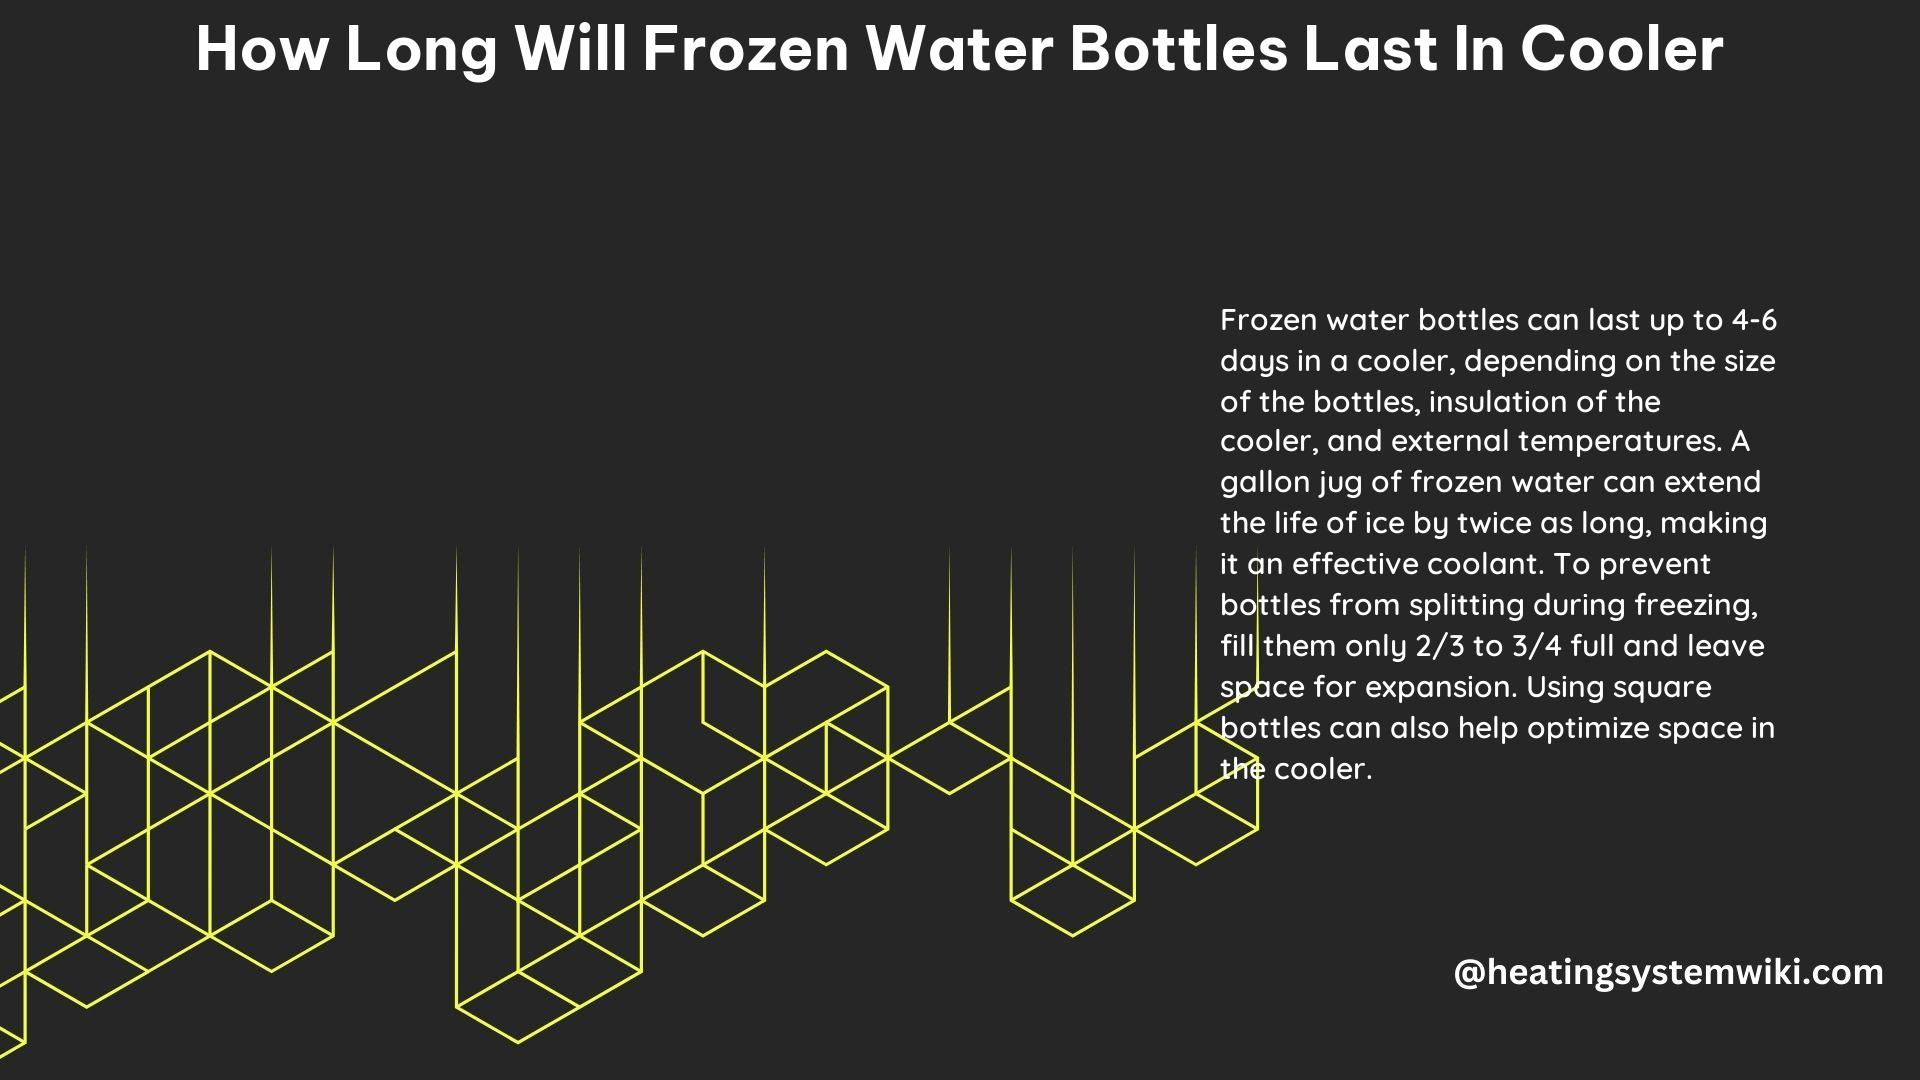 How Long Will Frozen Water Bottles Last in Cooler